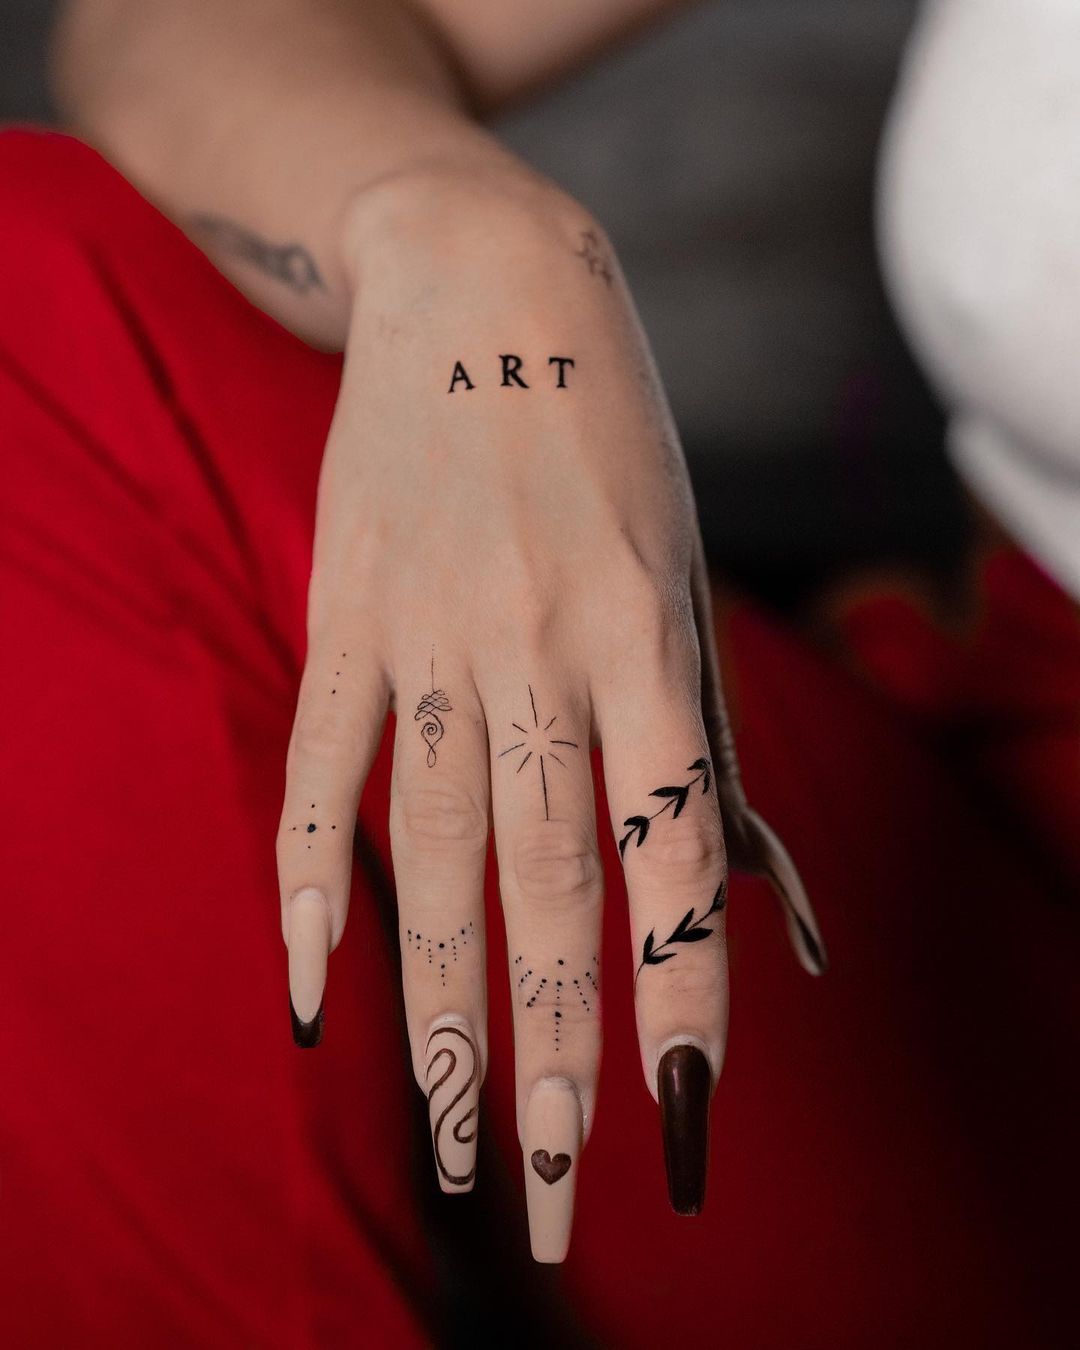 Abstract Finger Tattoo on Each Finger